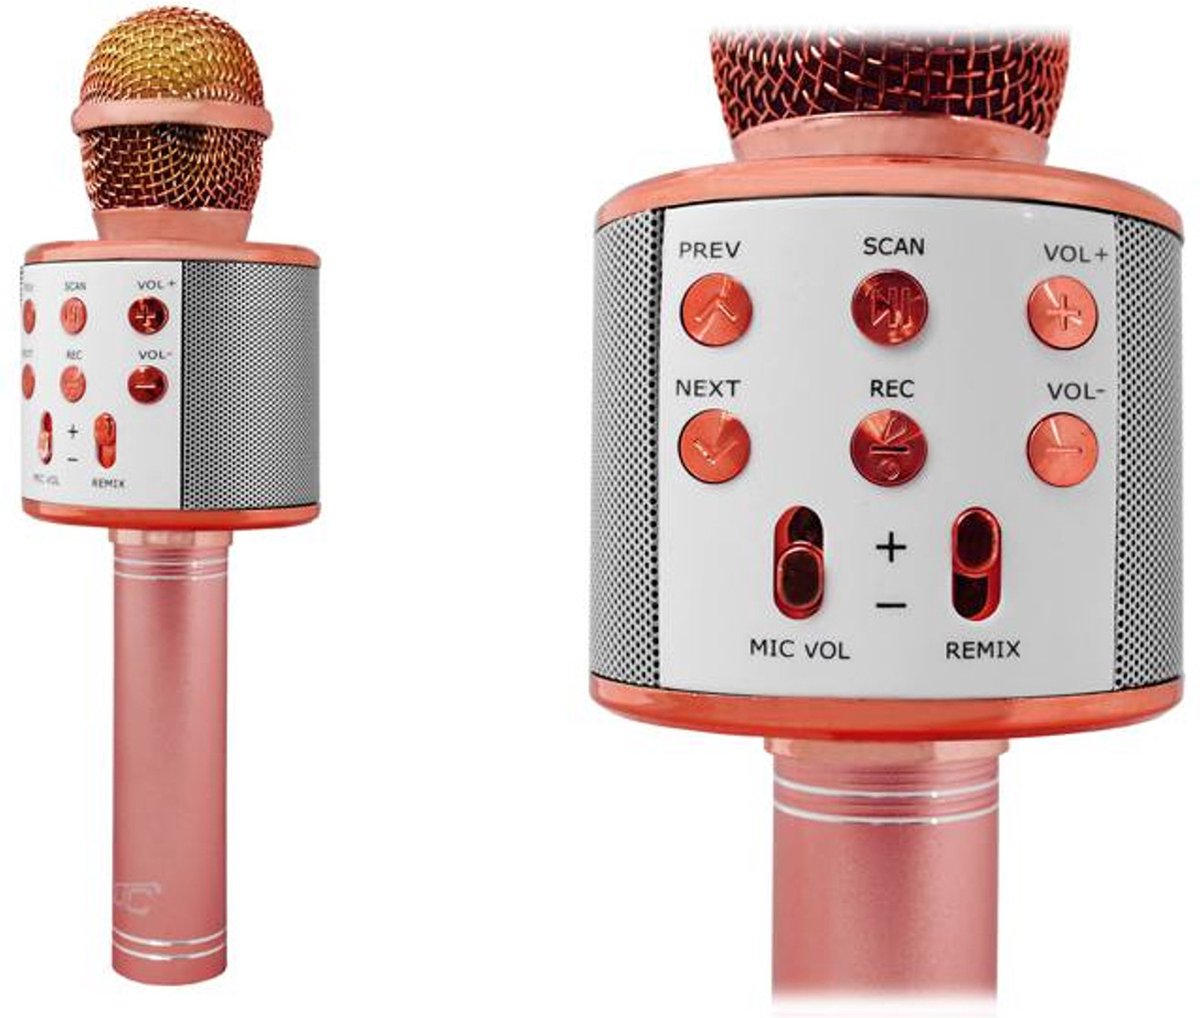 Bluetooth-microfoon met LTC MIC100-luidspreker - Roze/Goud